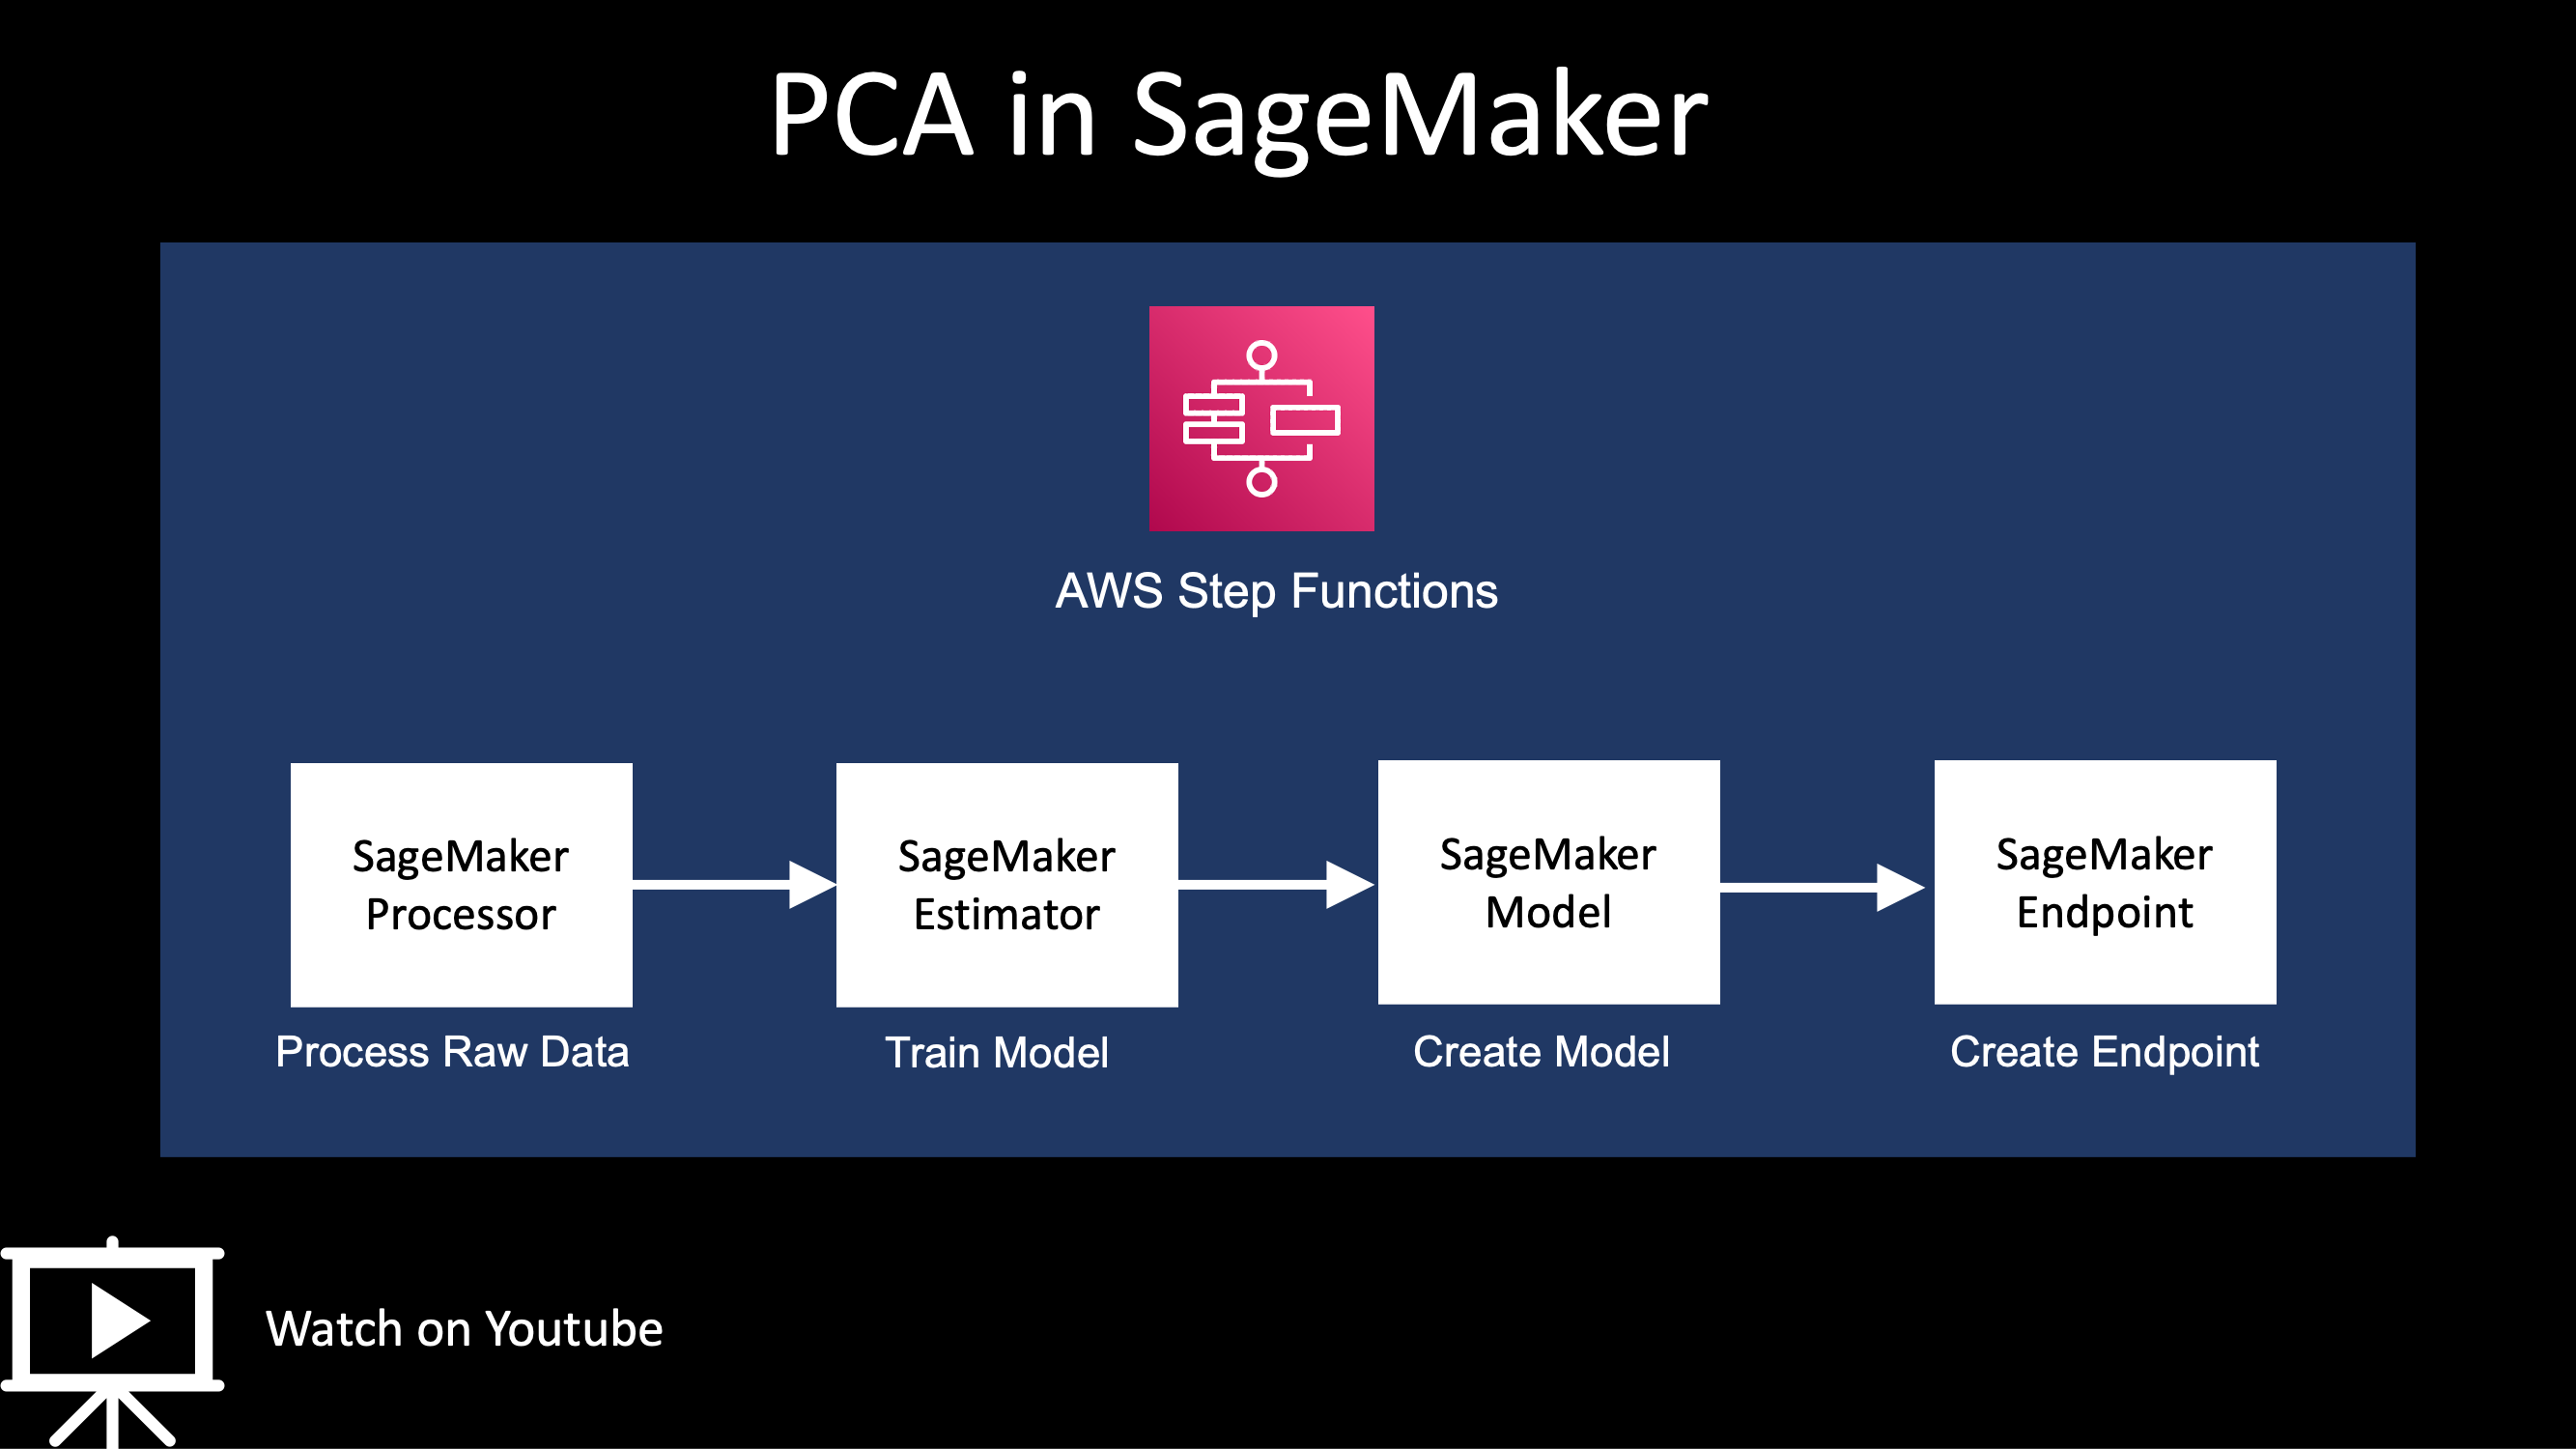 Build a Pipeline for PCA in SageMaker